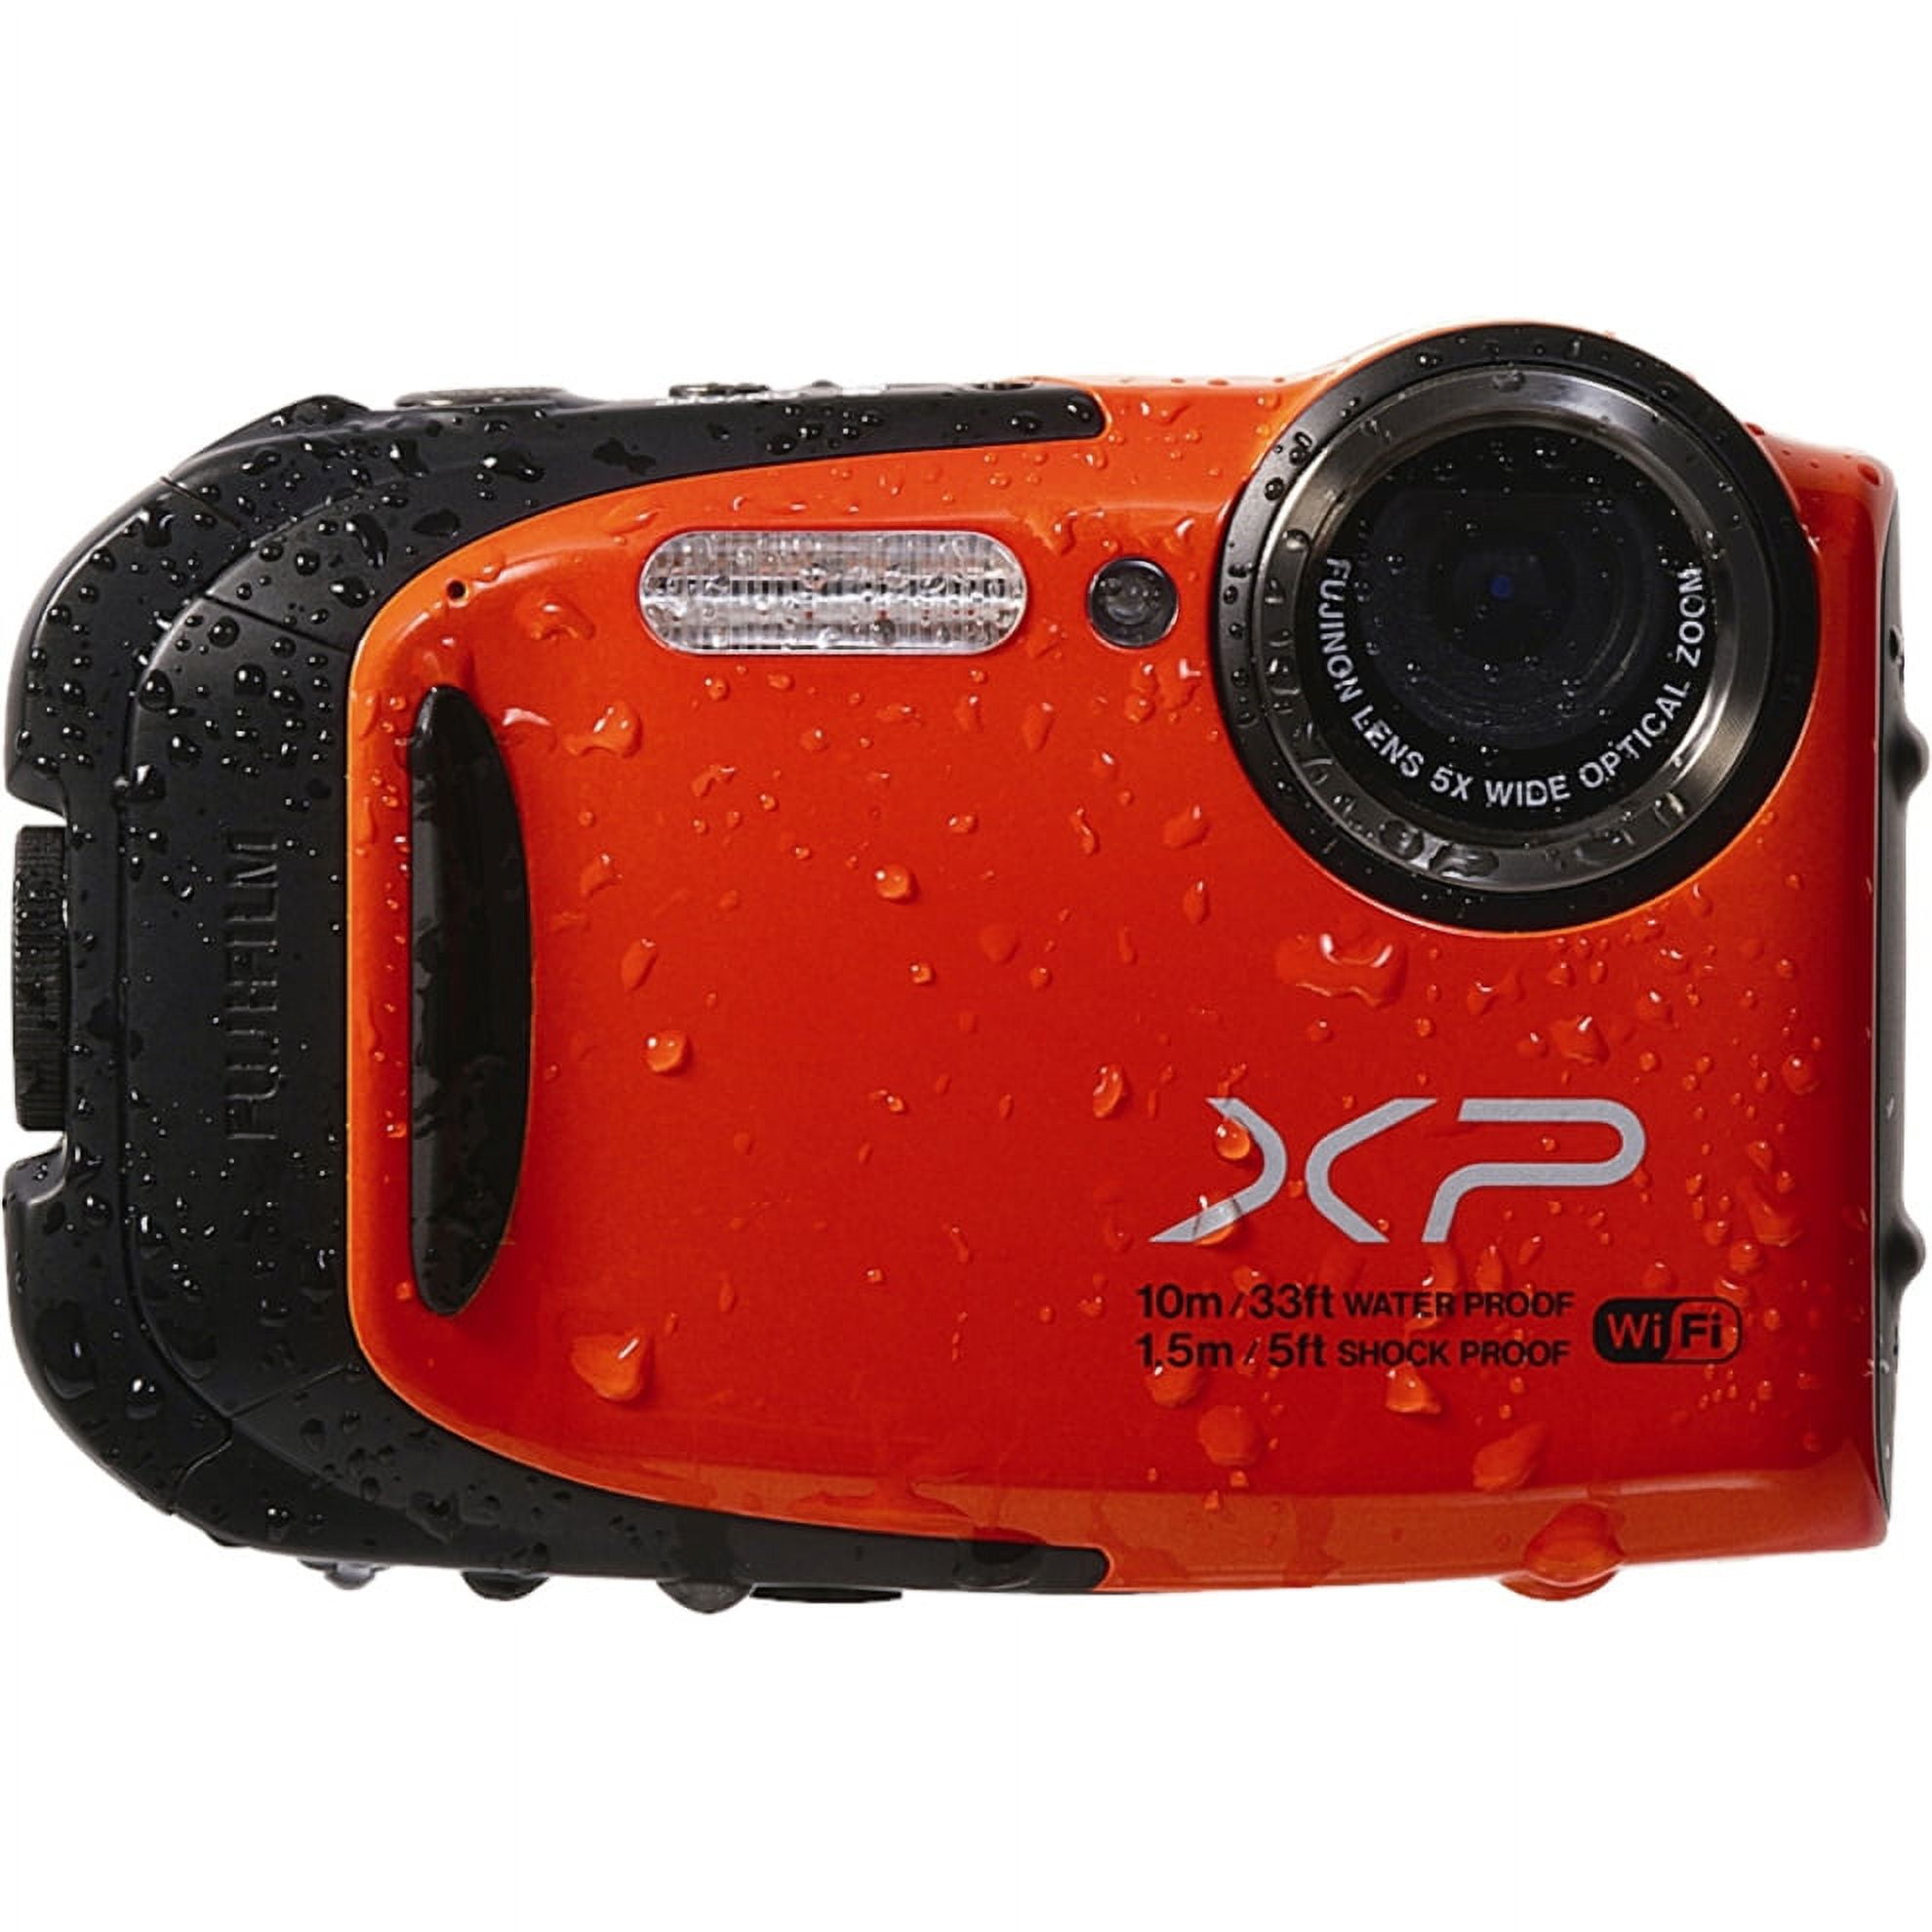 Fujifilm FinePix XP70 16.4 Megapixel Compact Camera, Orange